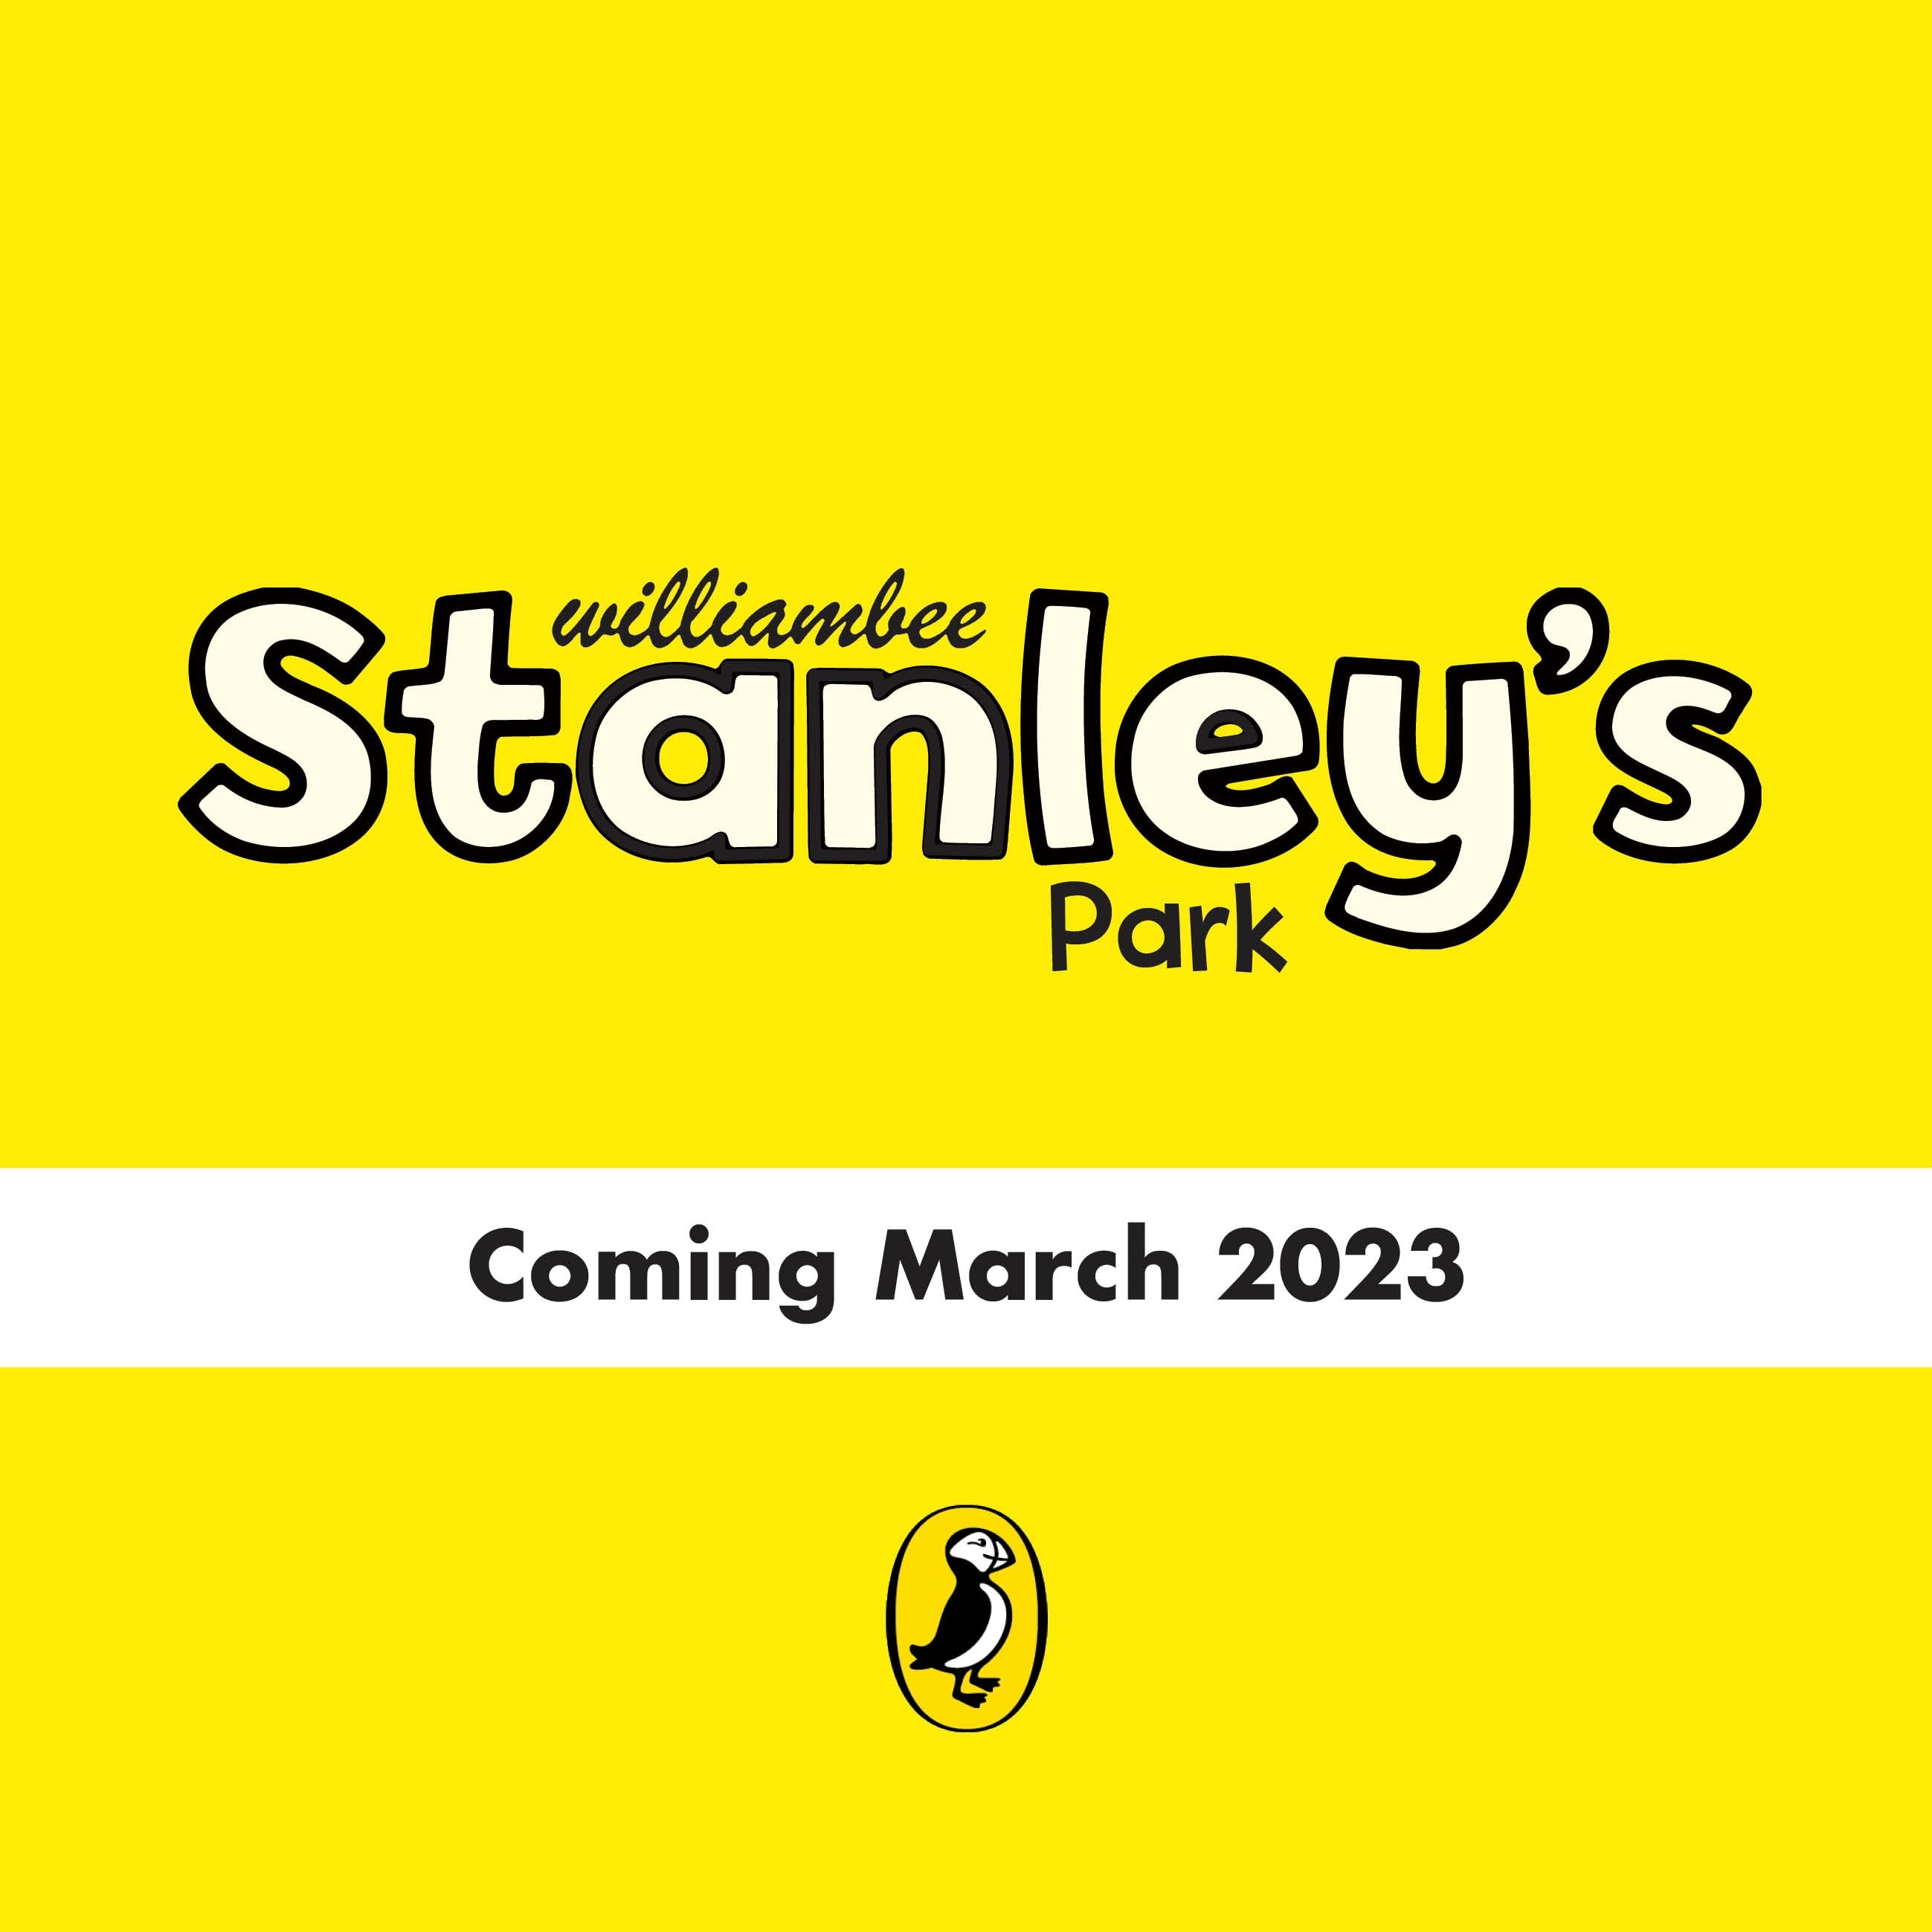 Stanley's Park